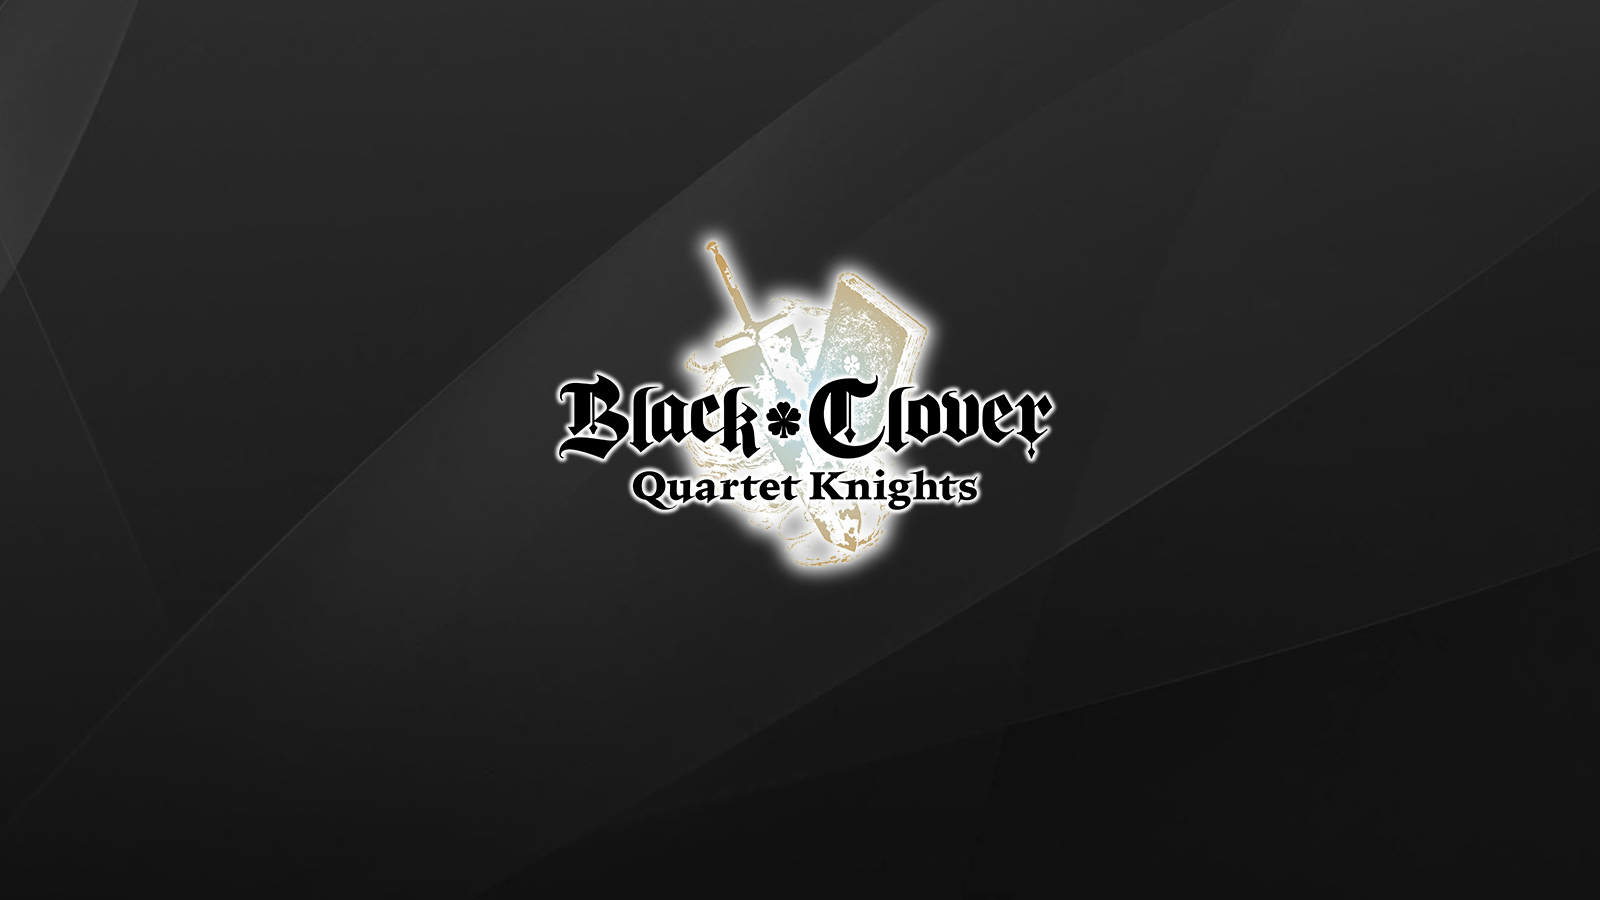  Black  Clover  4K Logo  Wallpapers  Top Free Black  Clover  4K 